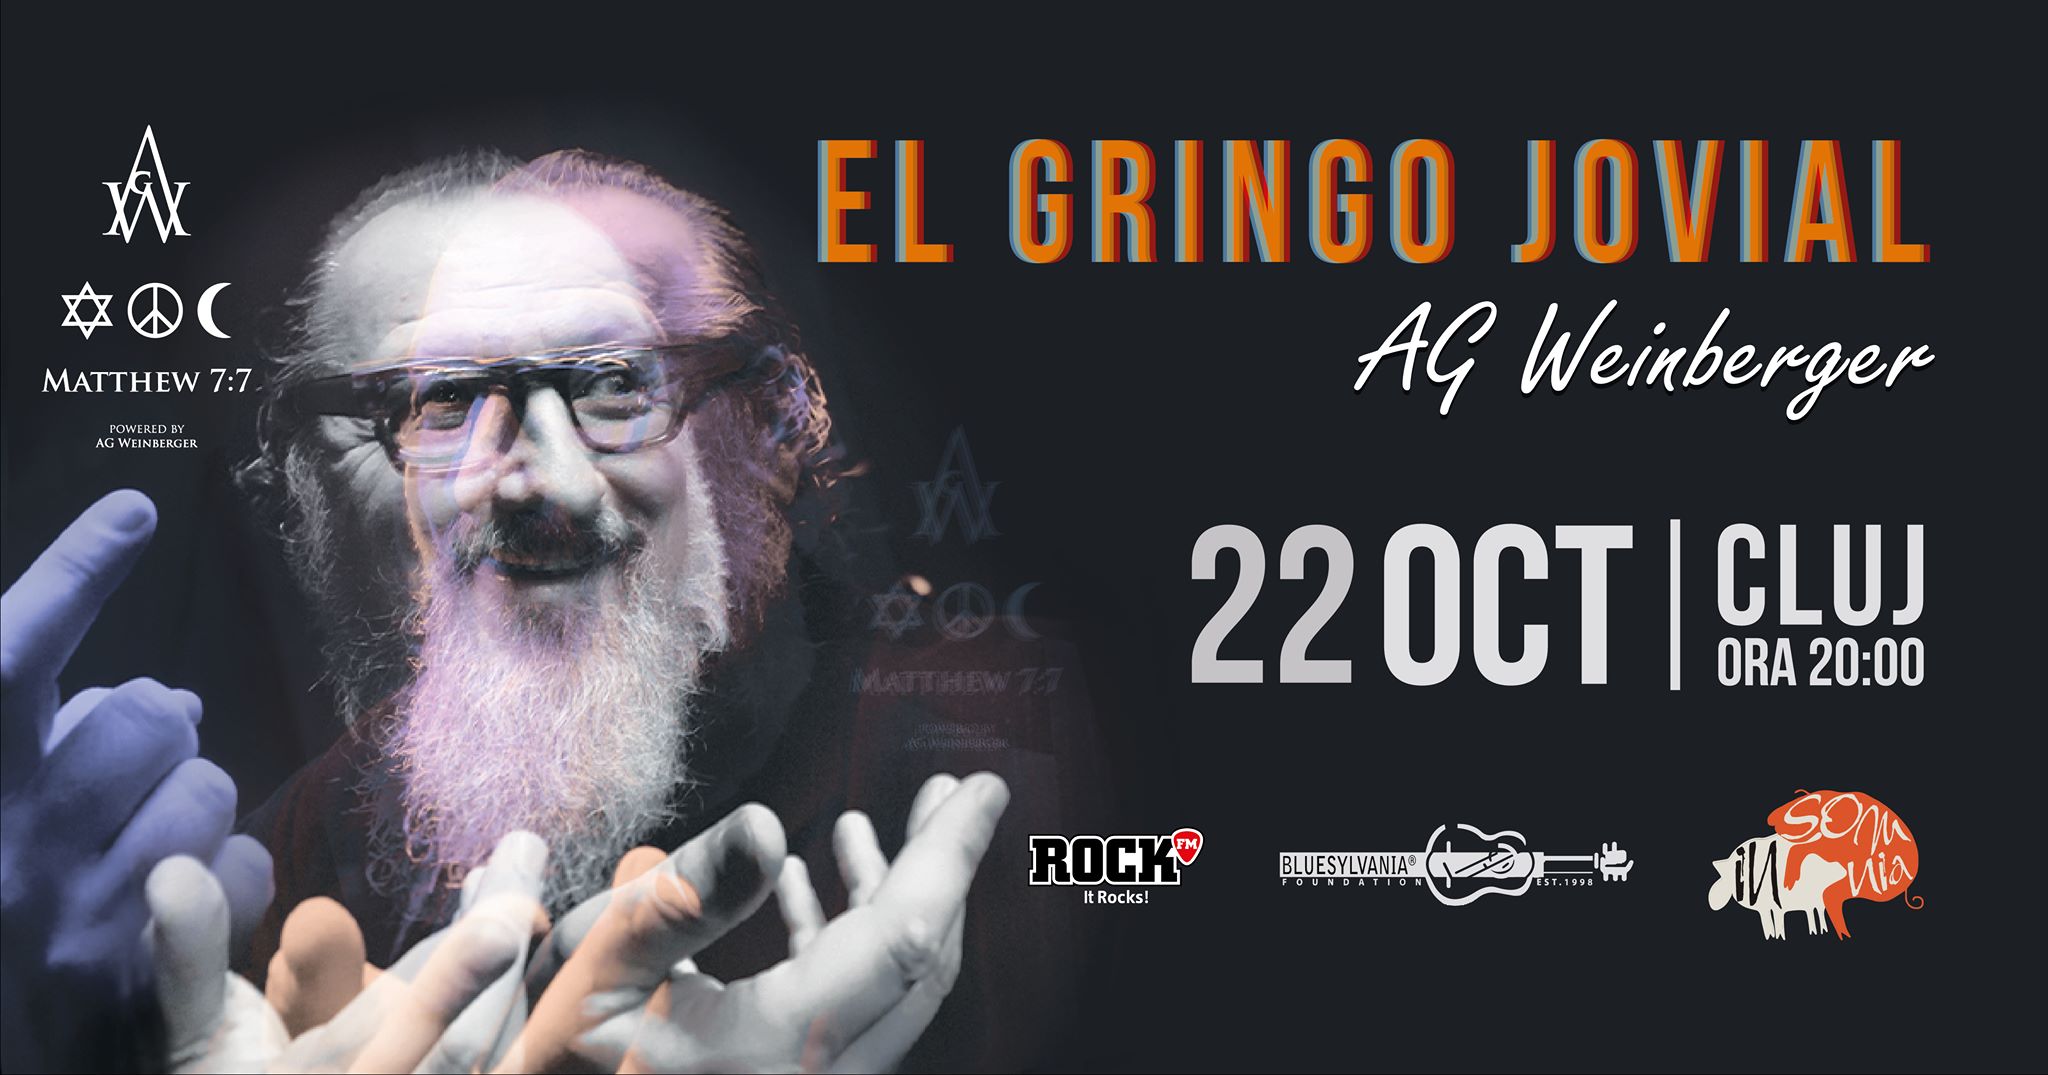 El Gringo Jovial by AG Weinberger